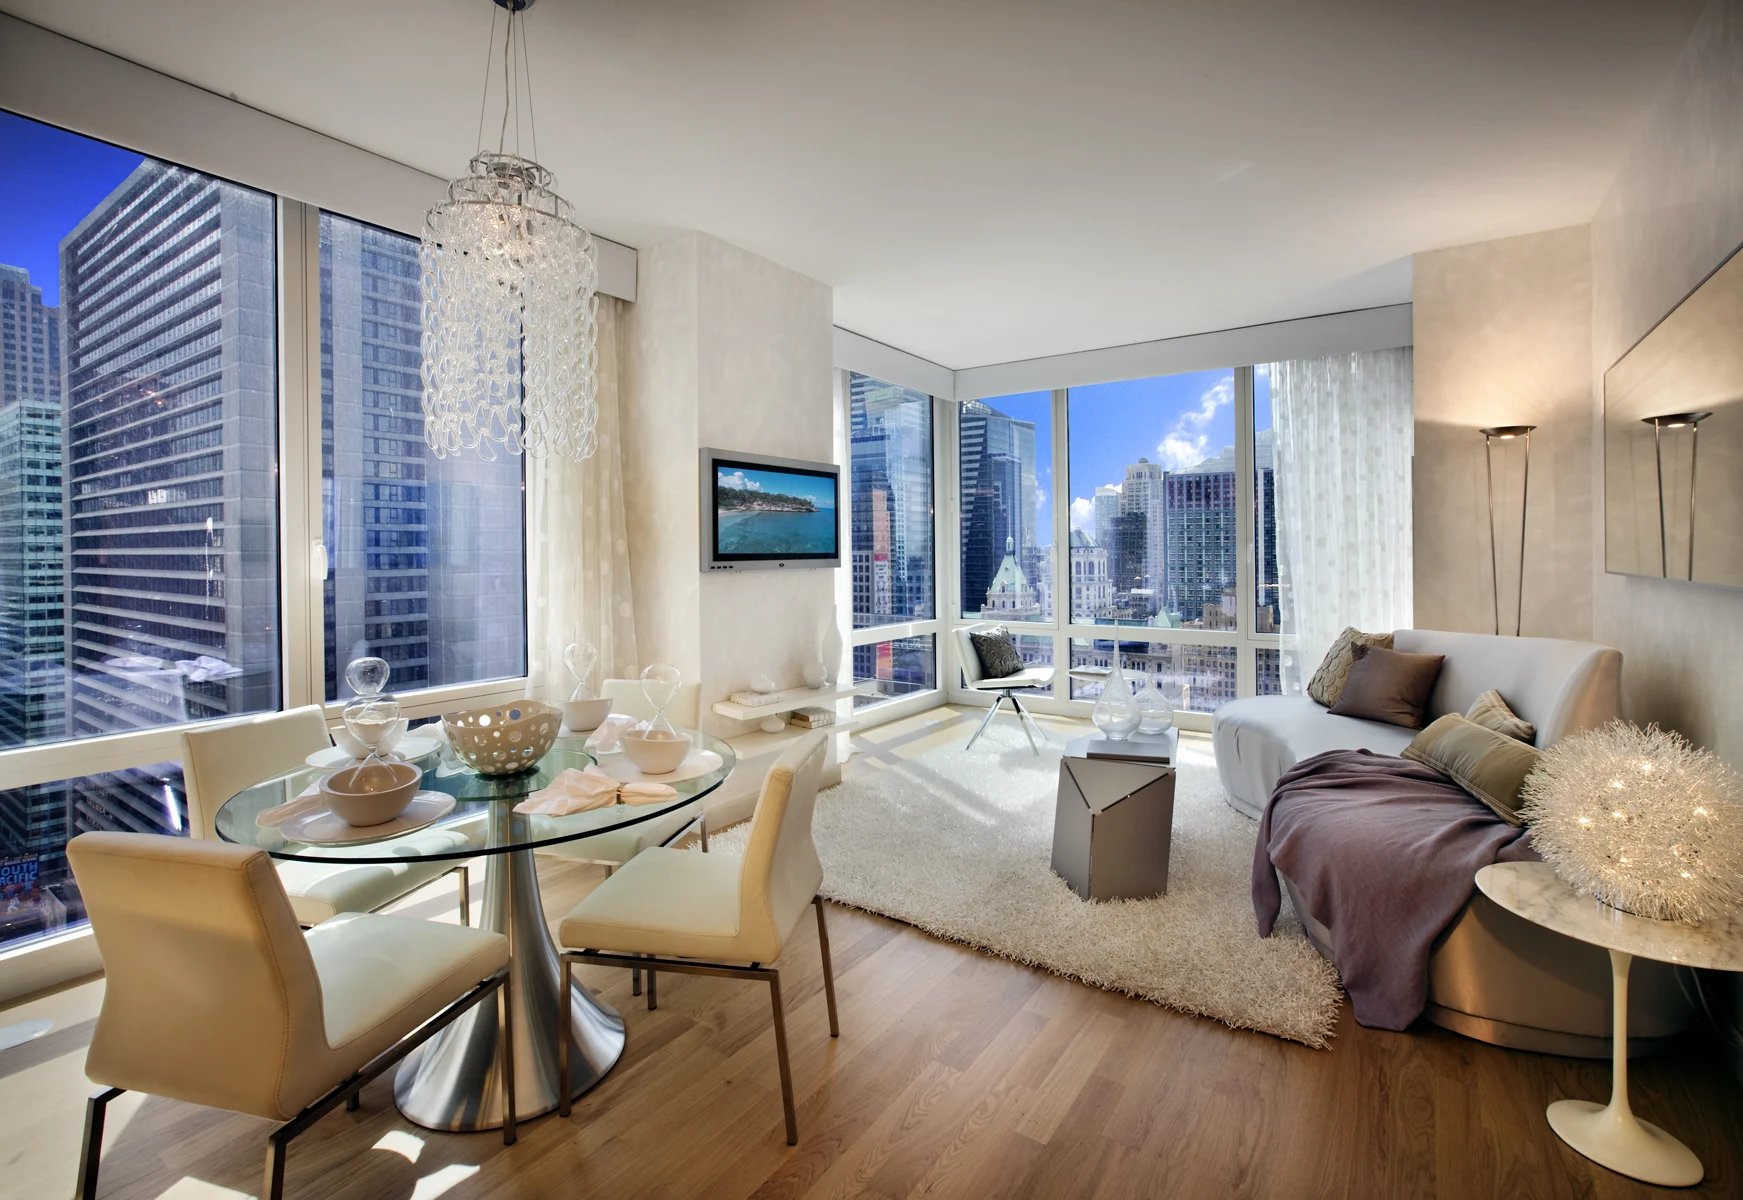 Opulent penthouse interior showcasing luxury design elements